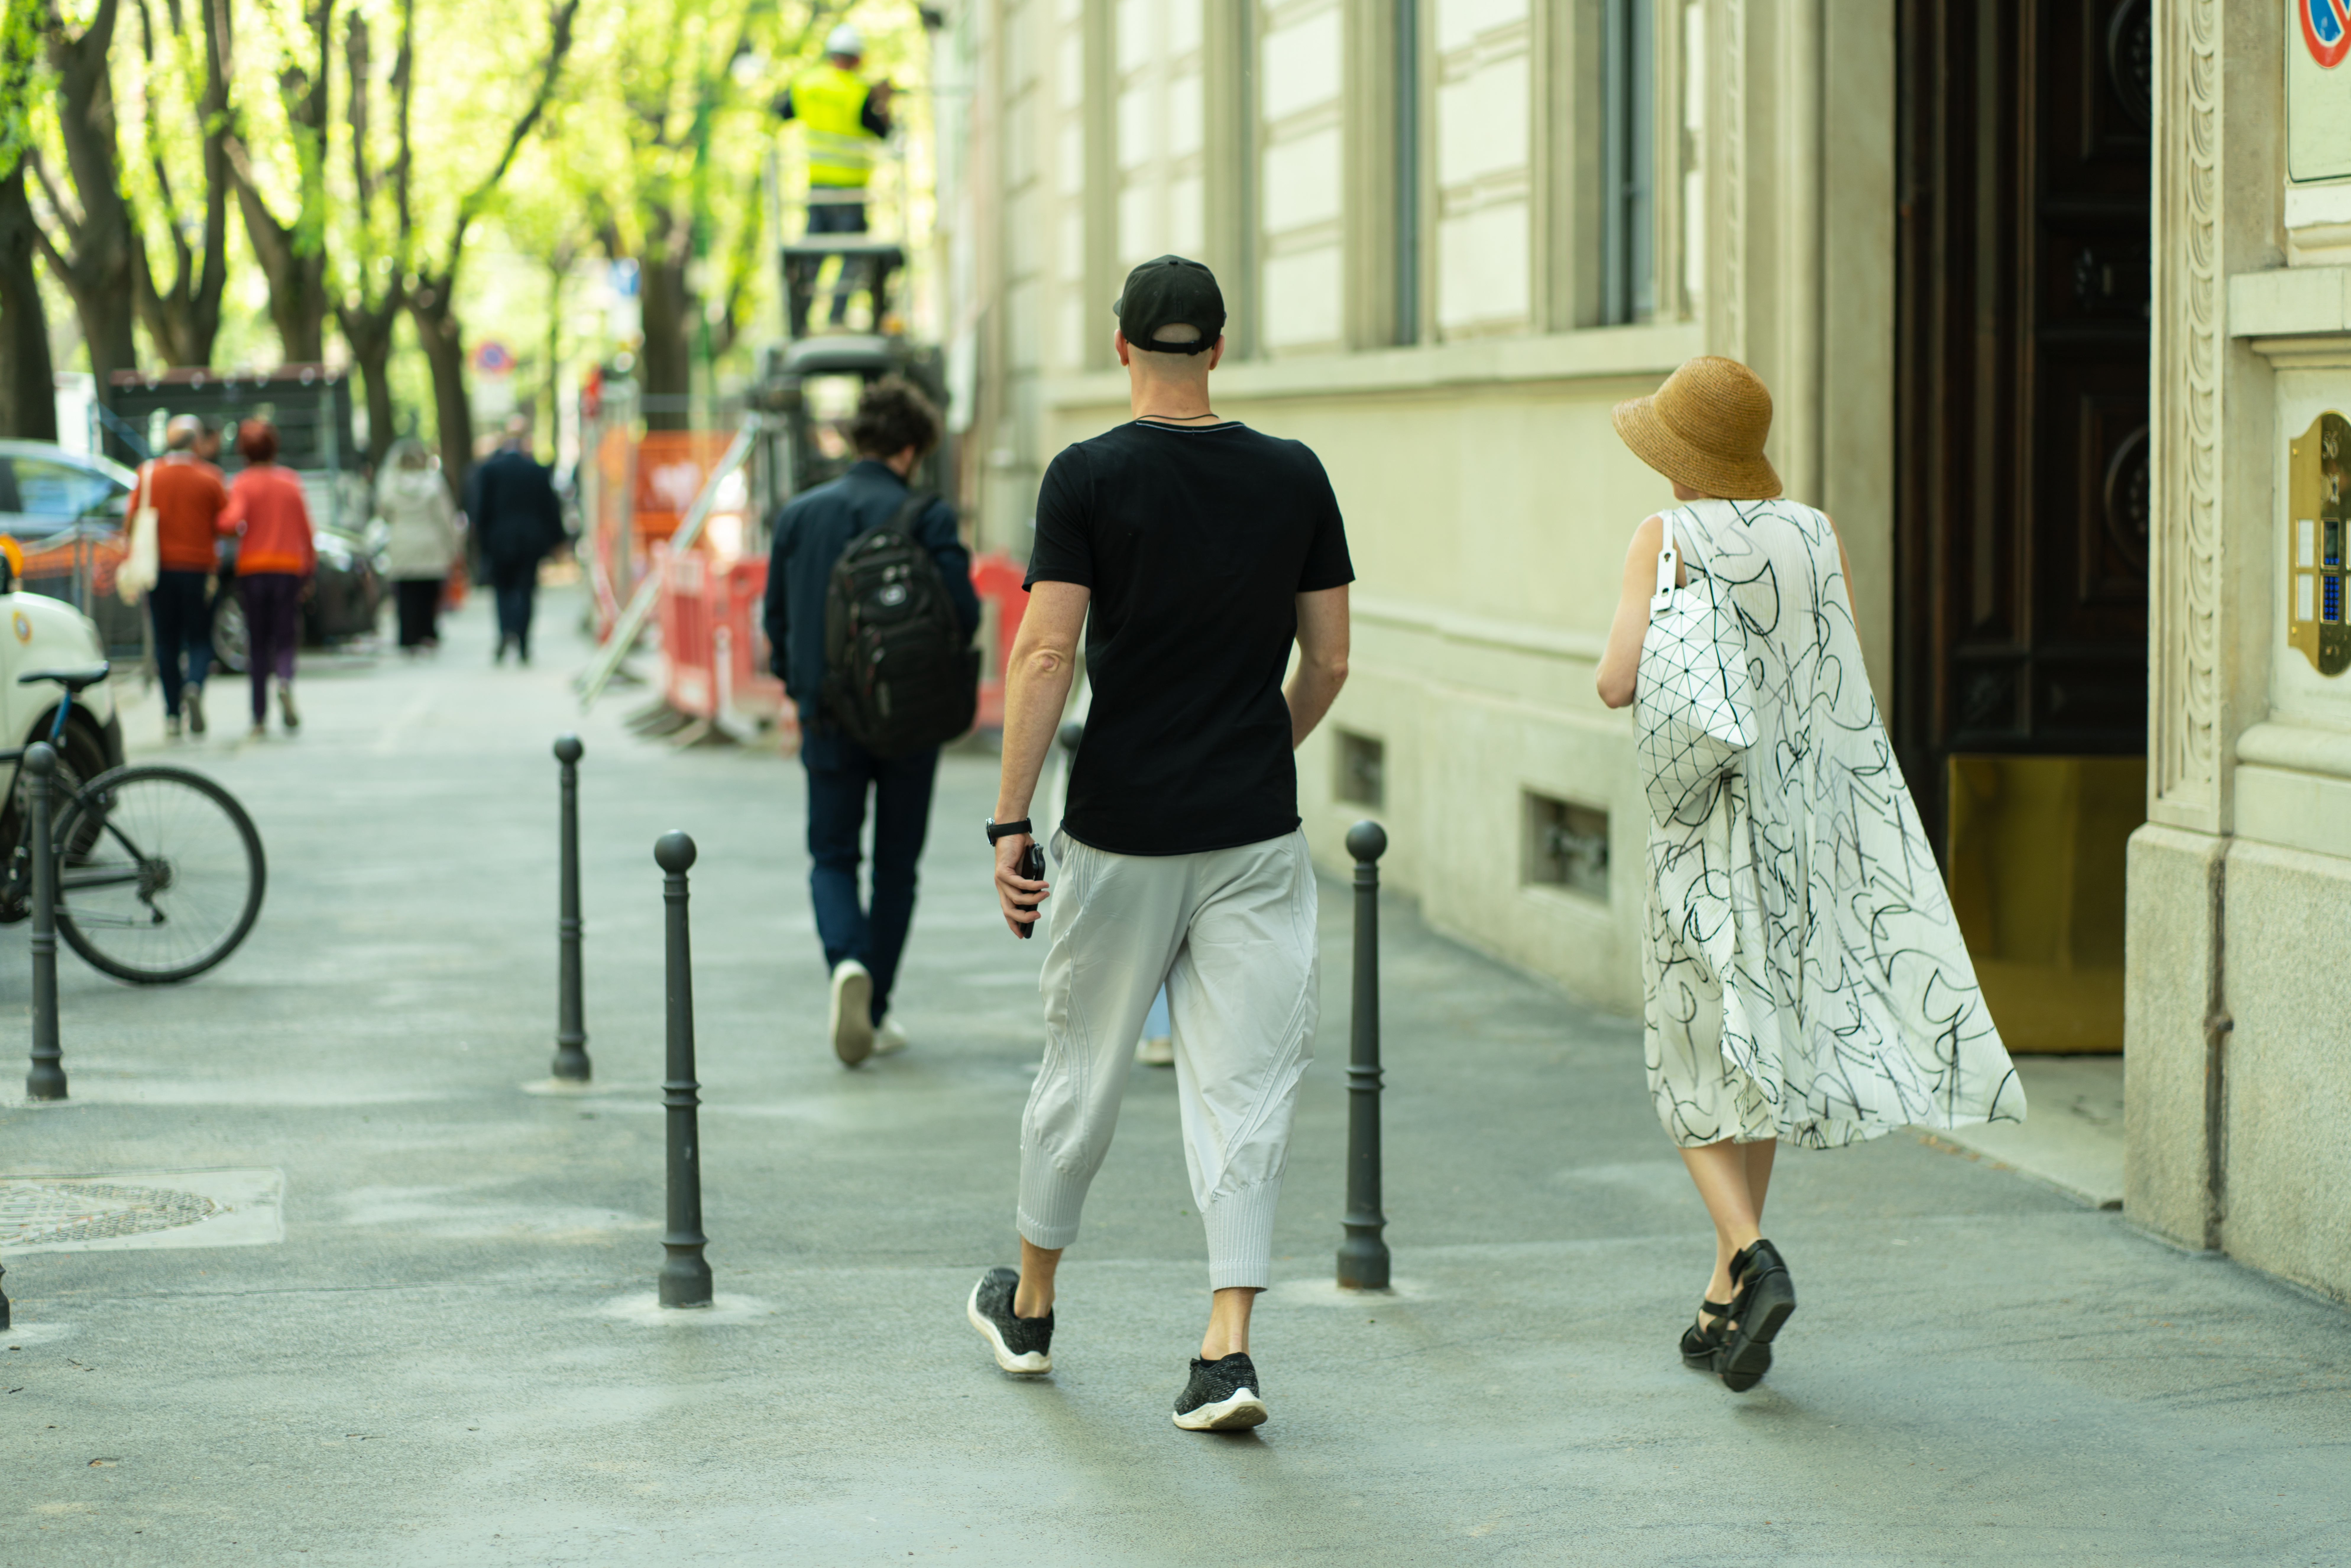 Couple walking down the street. | Source: Shutterstock